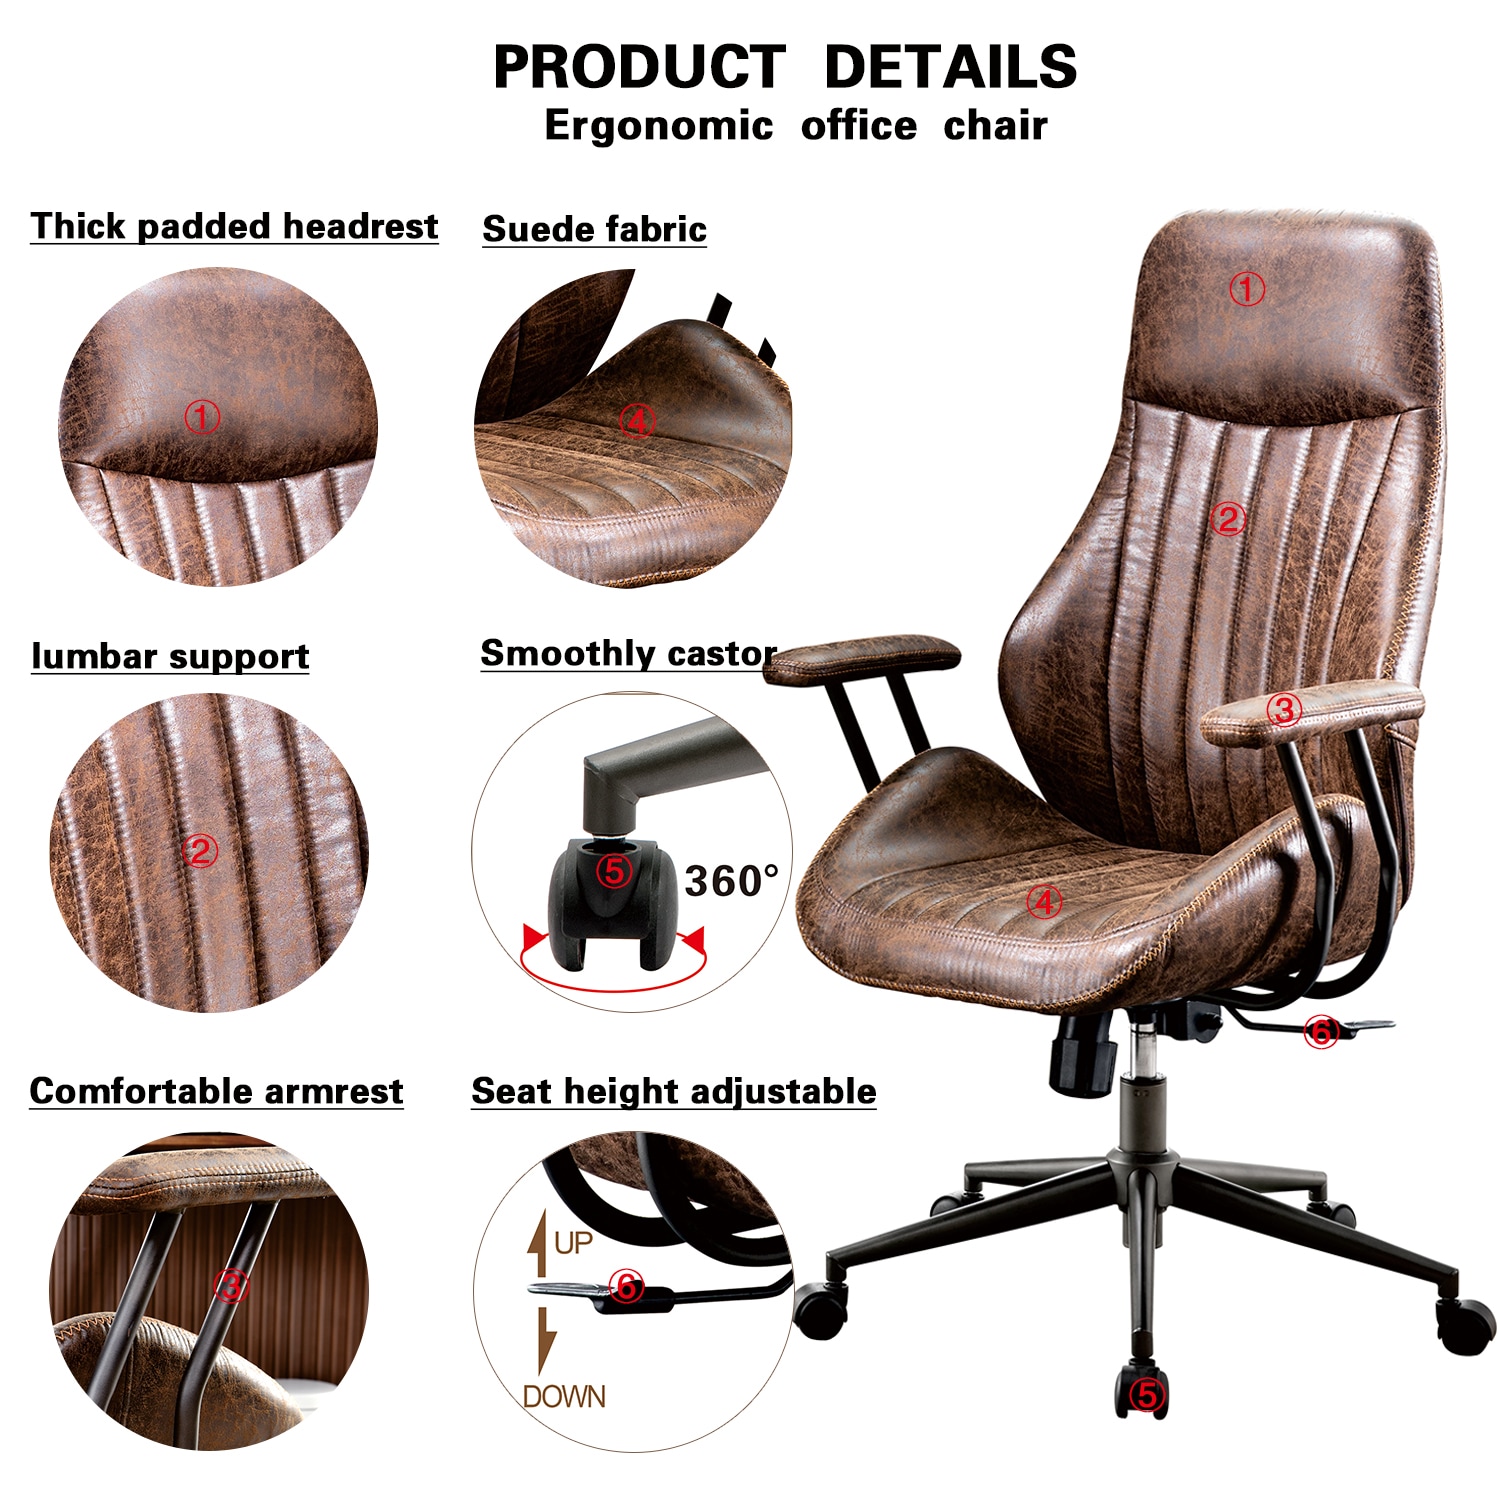 Ergonomic and orthopedic chairs - key differences - Wellback Shop